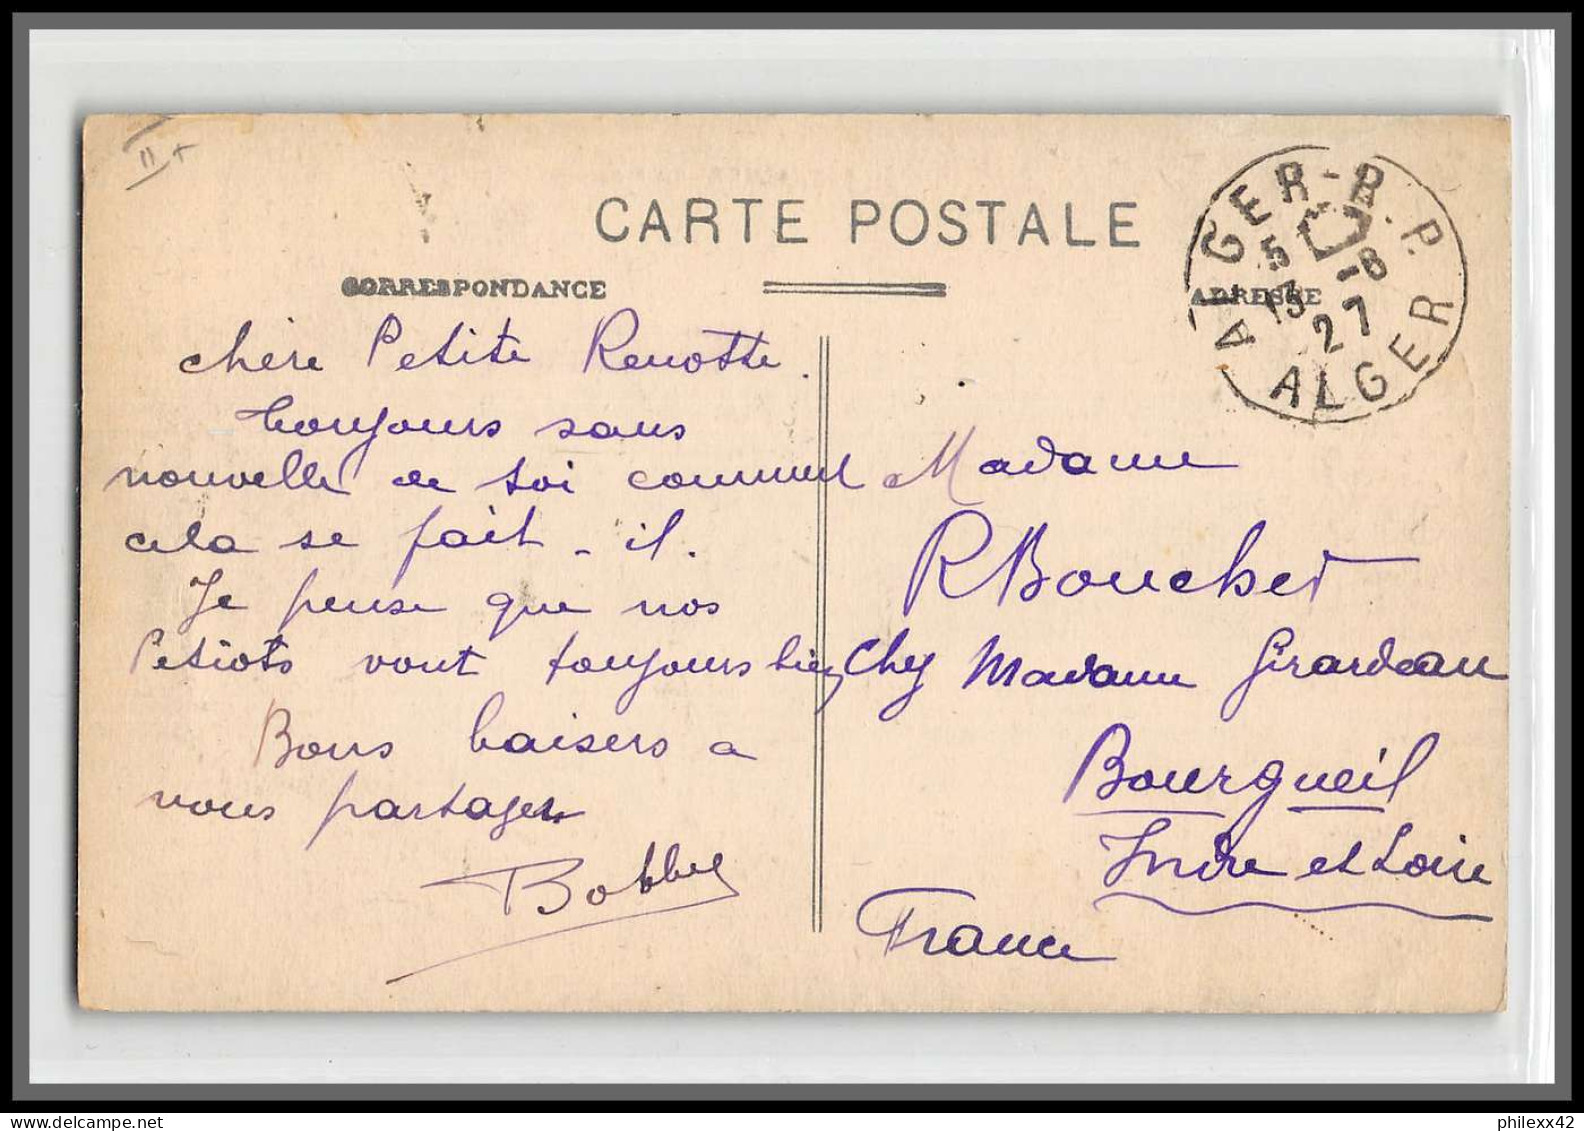 56769 N°45 Mosquée Djama Djedid Mosque Alger 1927 Algérie Carte Maximum (card) édition - Maximum Cards